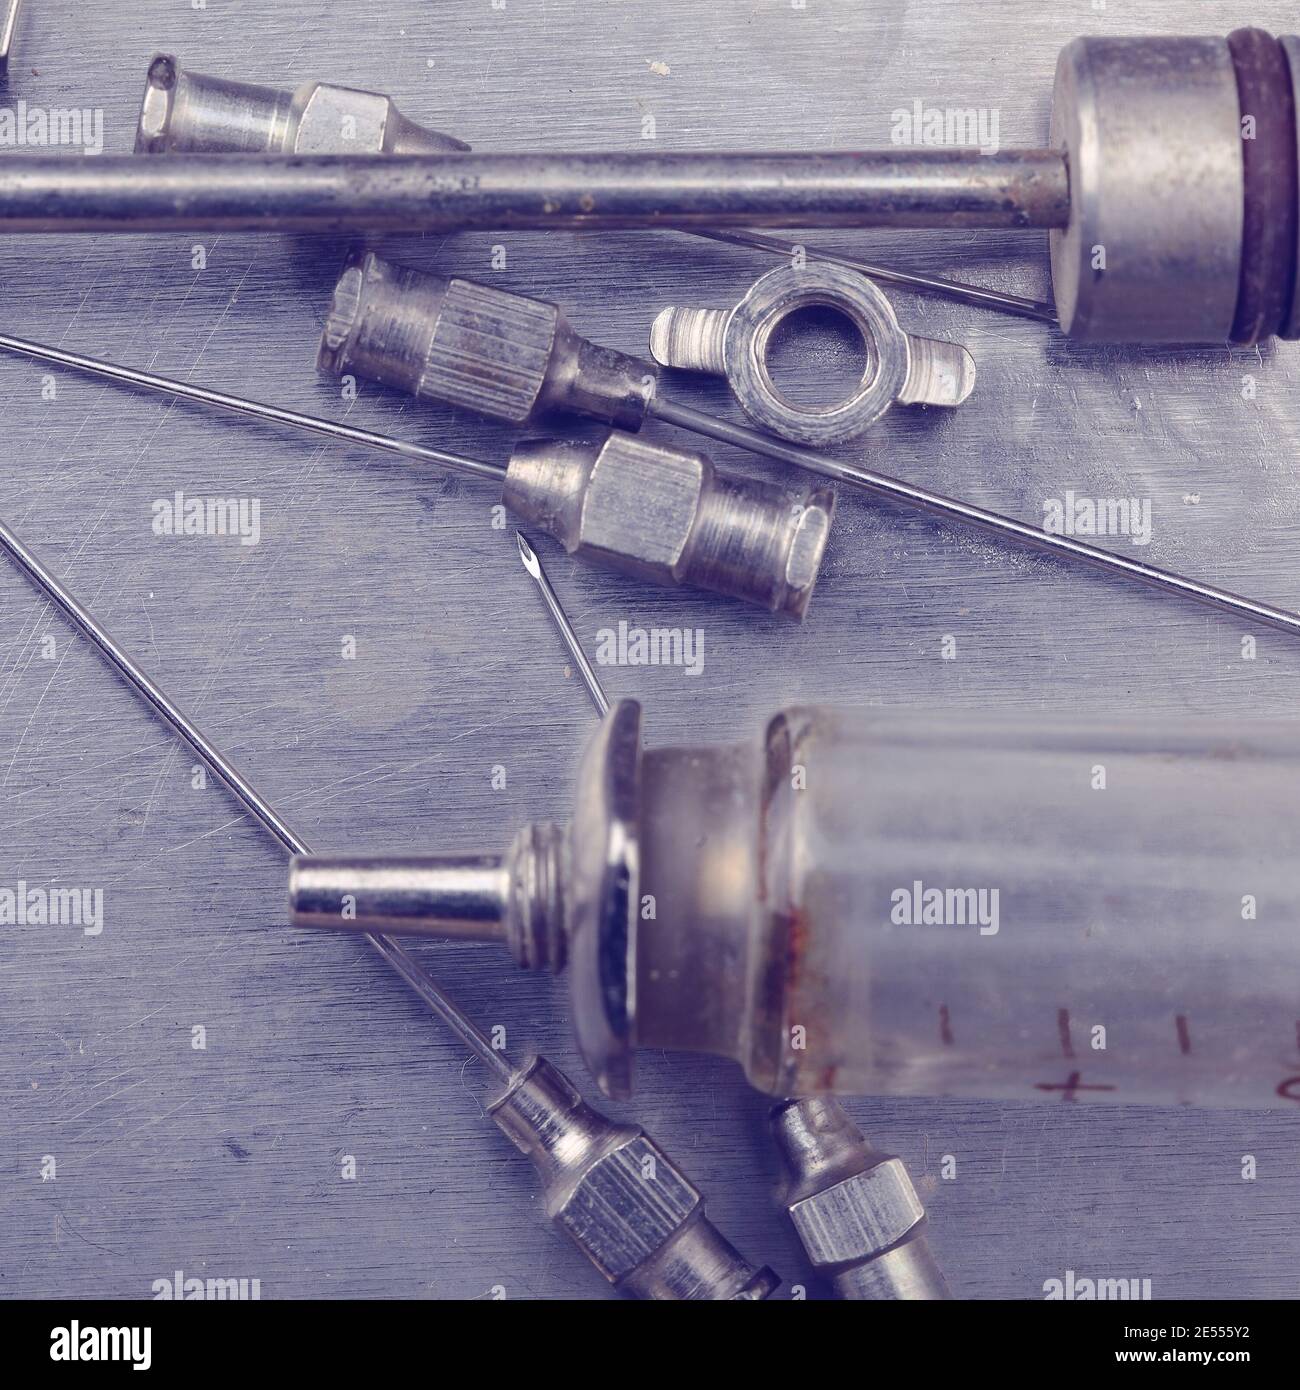 Parts of old medical syringe. Stock Photo